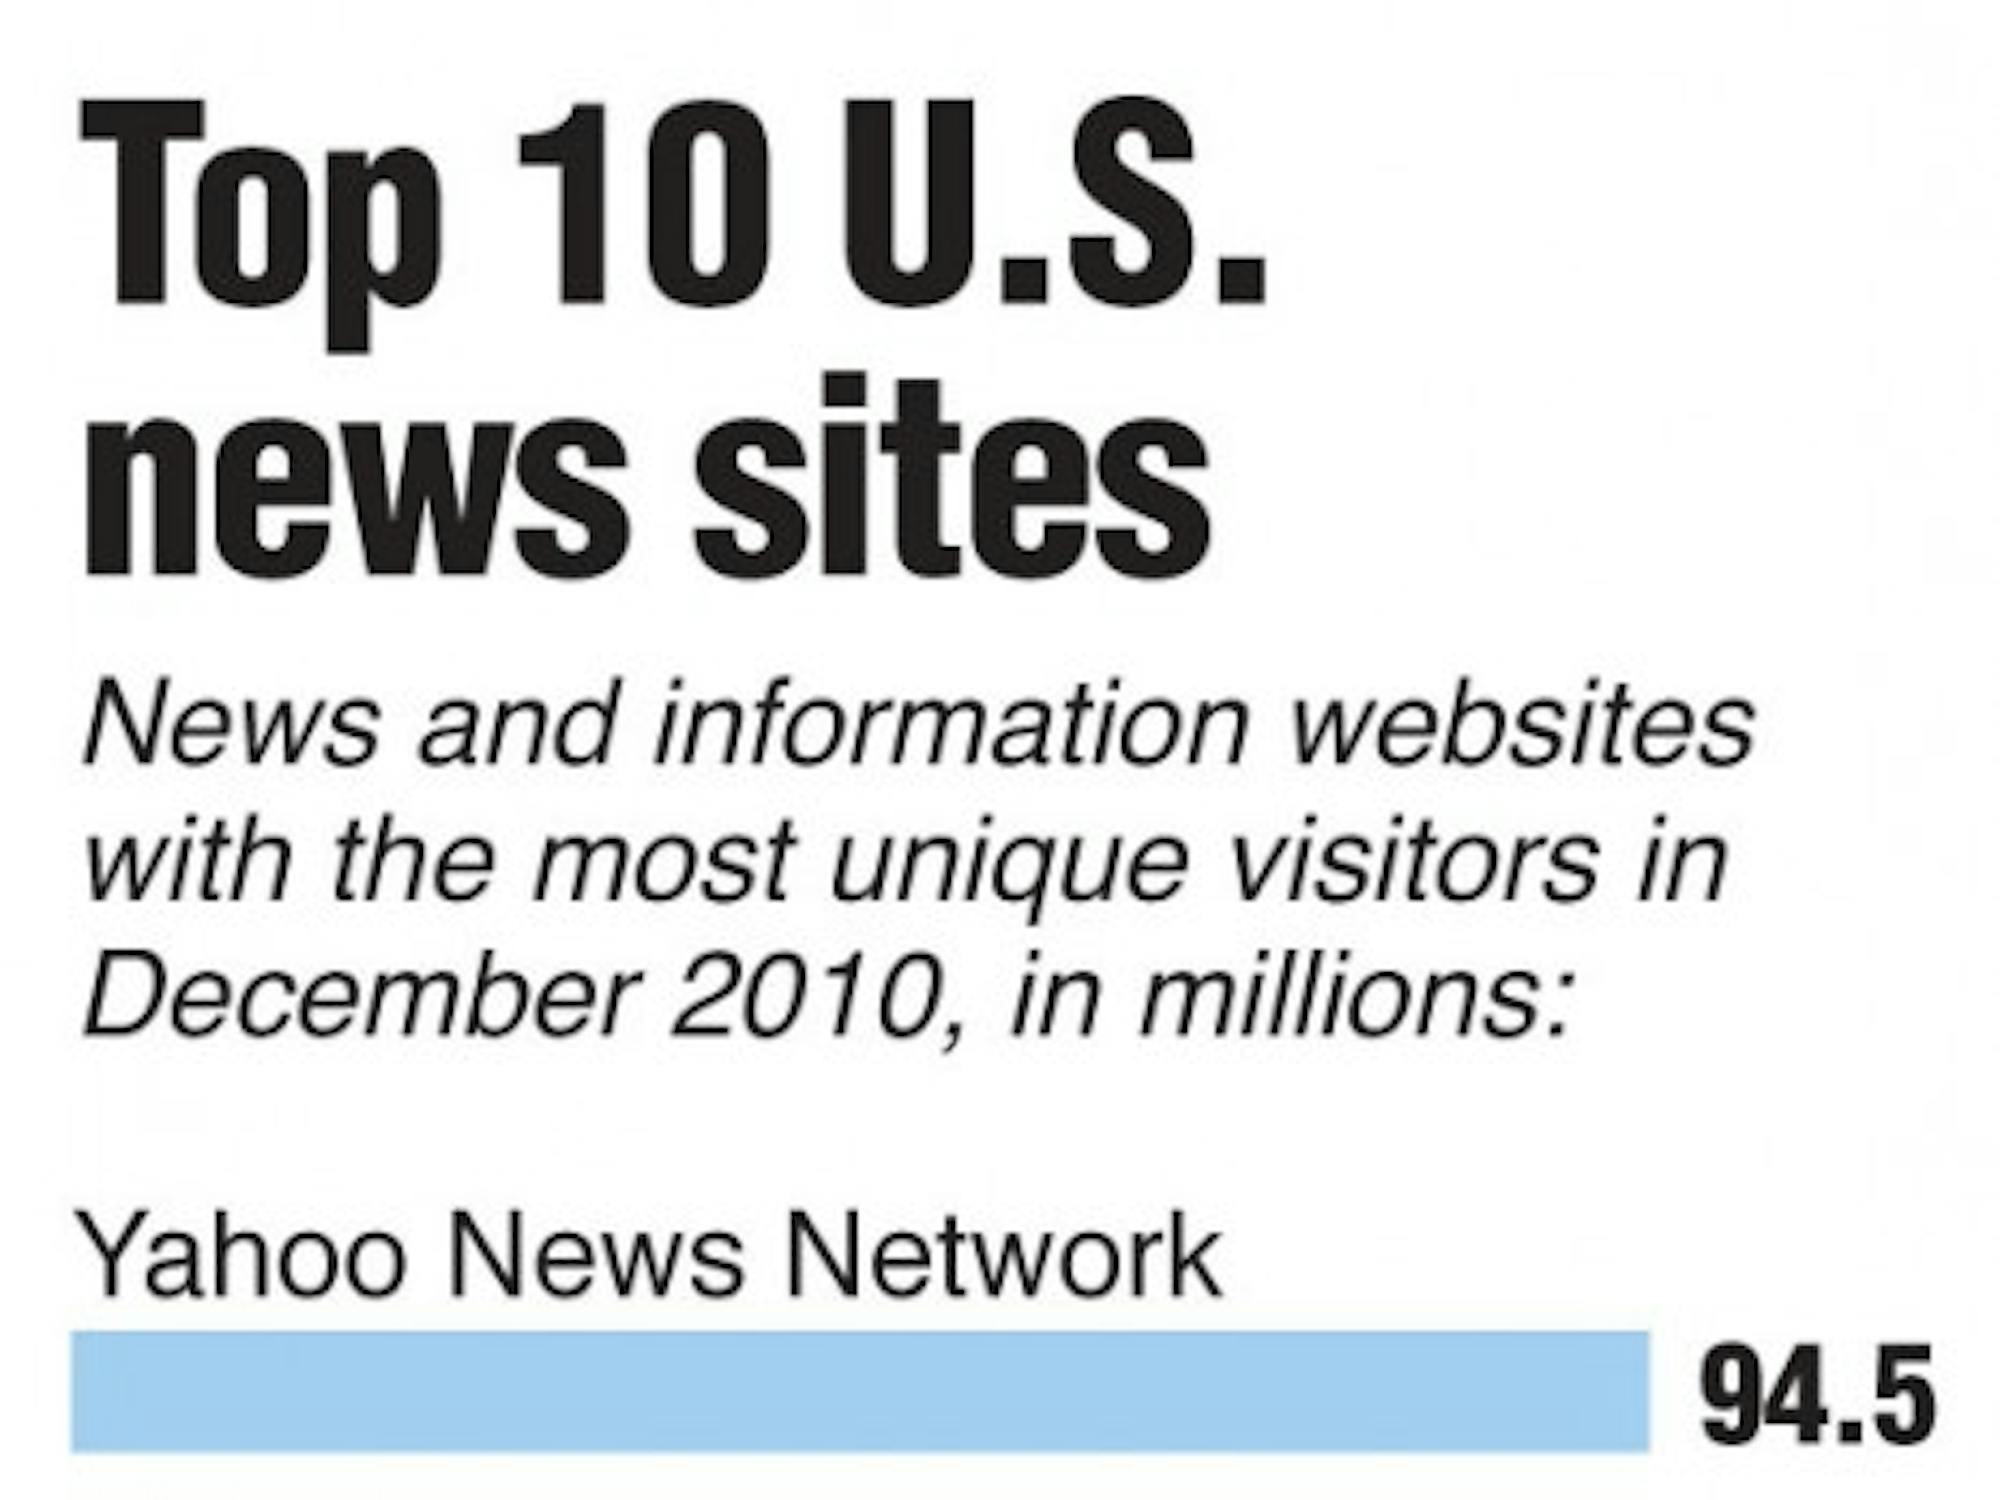 20110209 Top news sites